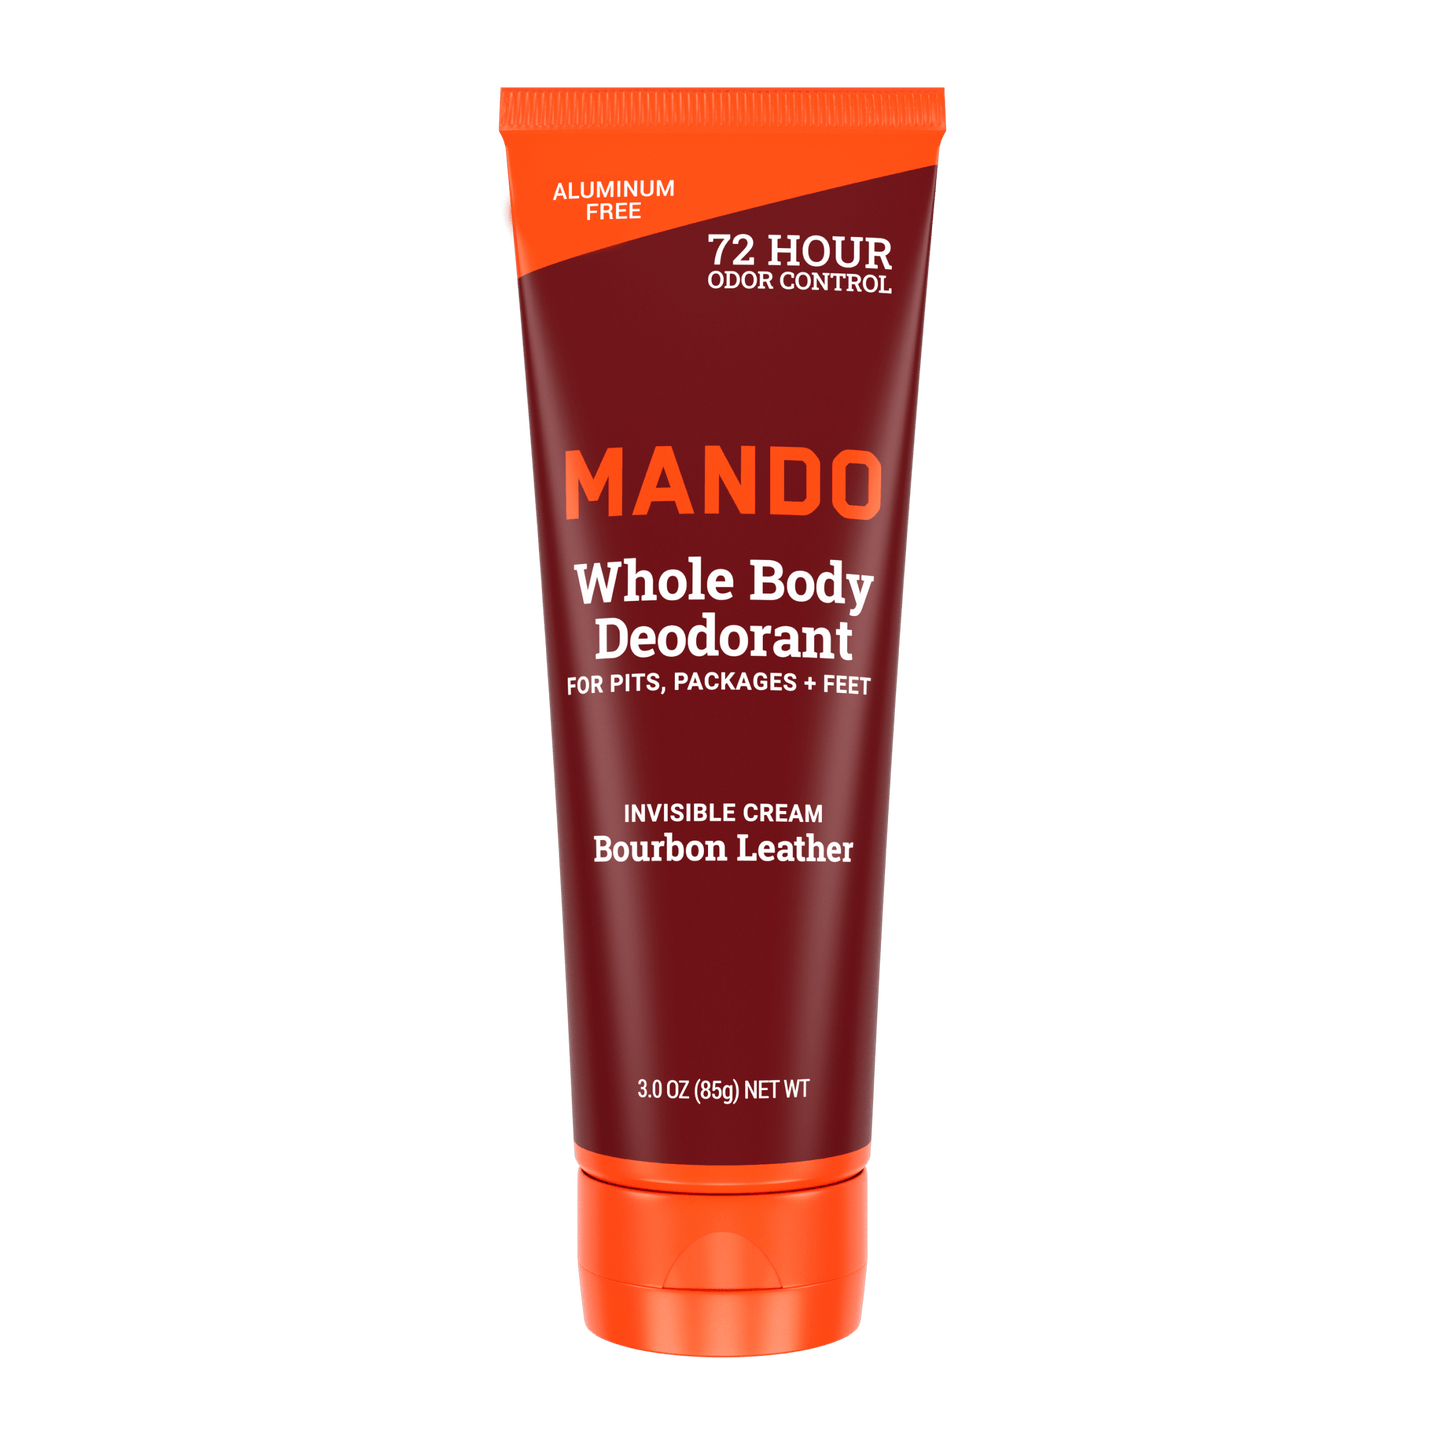 orange and maroon bourbon leather cream deodorant against a white background